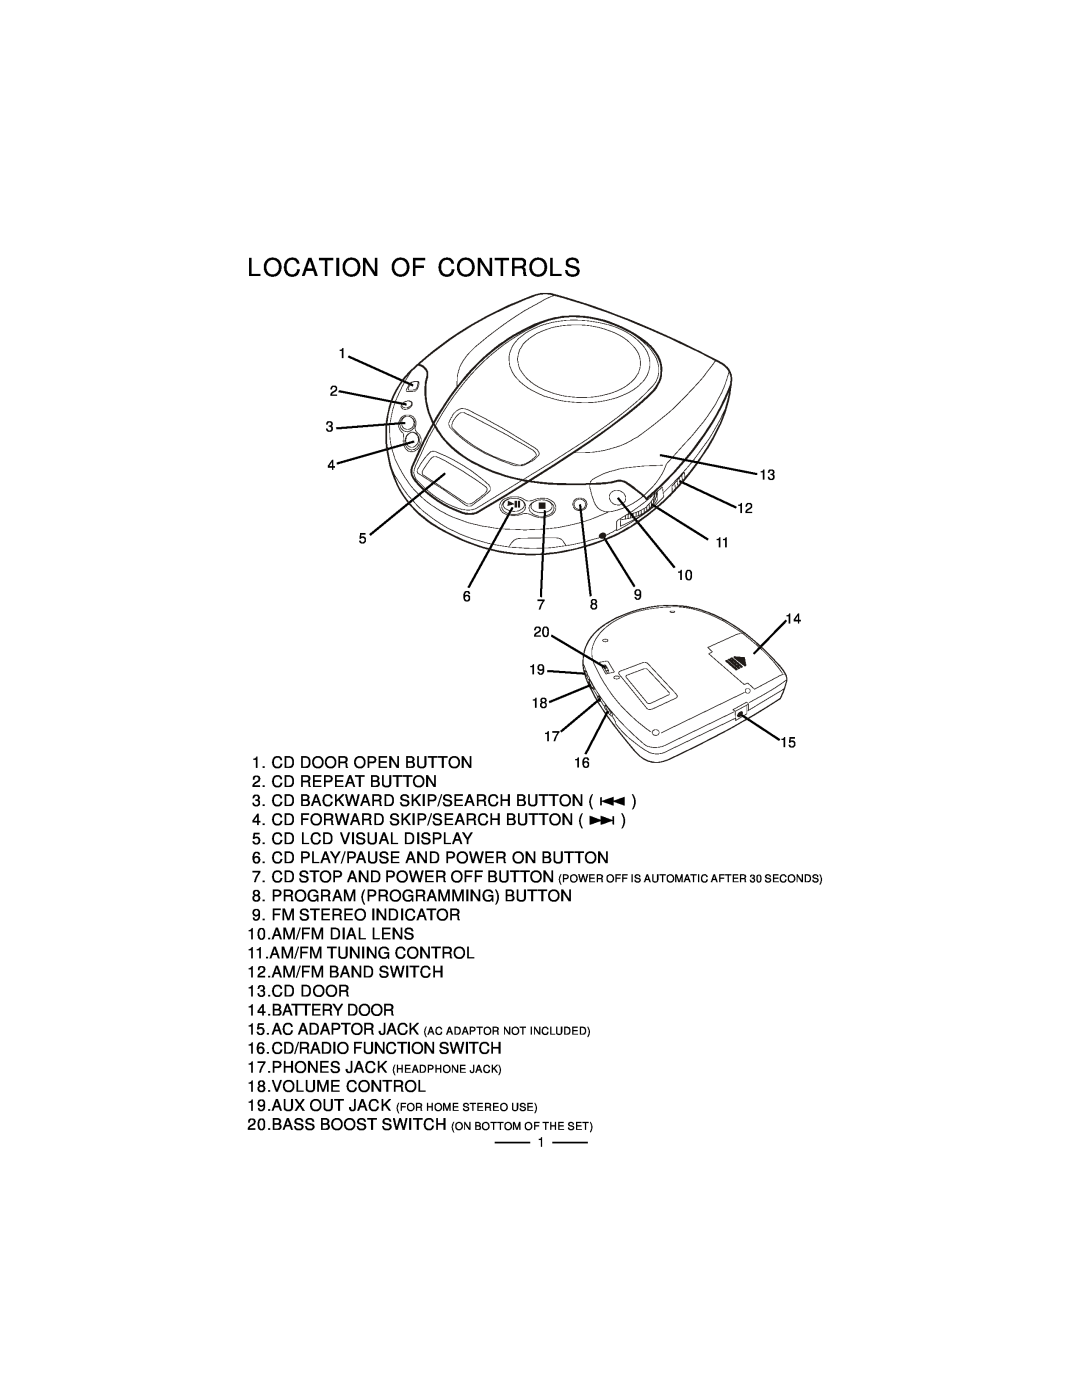 Lenoxx Electronics CD-61 operating instructions Location Of Controls 